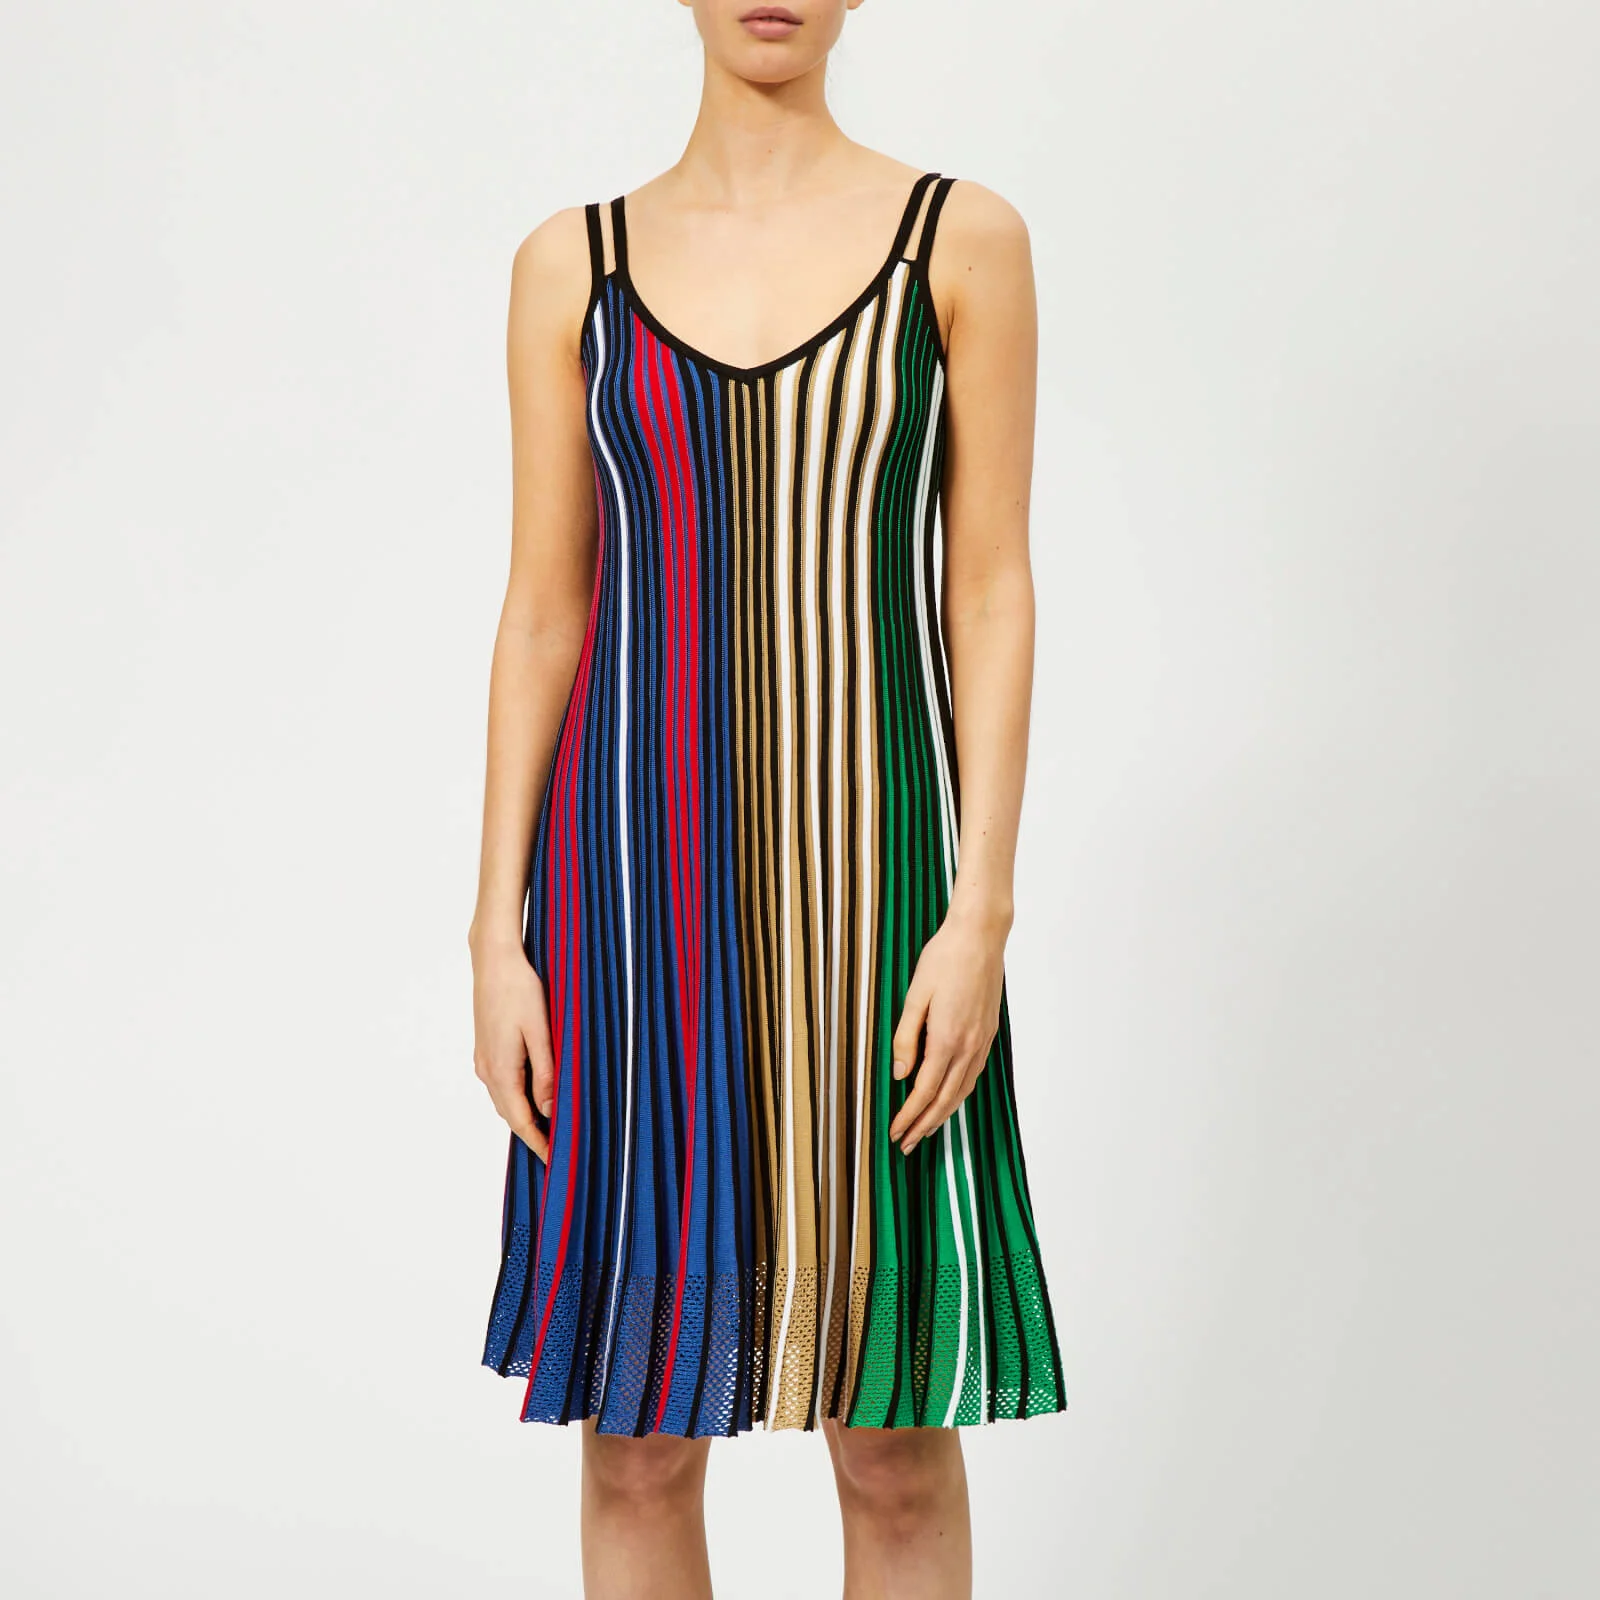 KENZO Women's Vertical Ribs Sleeveless Dress - Multicolor Image 1